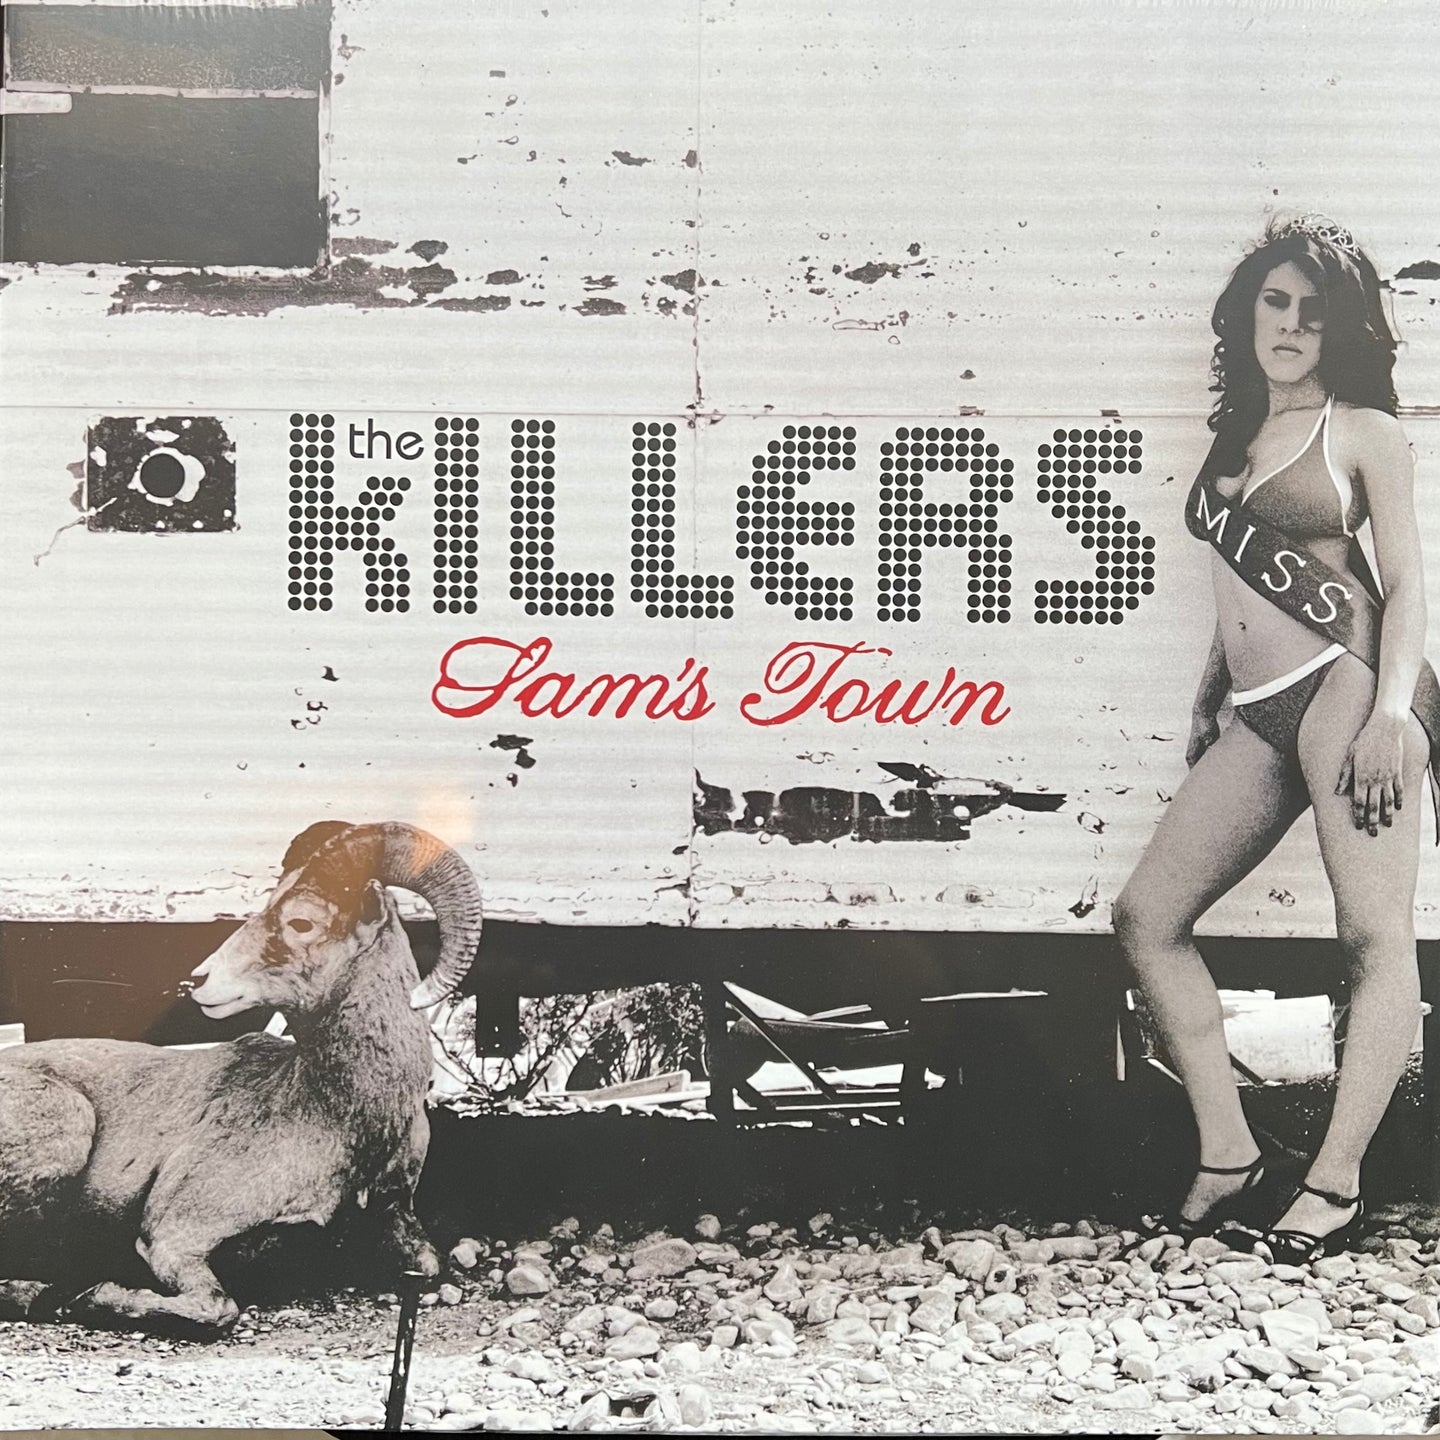 Killers - Sam's Town